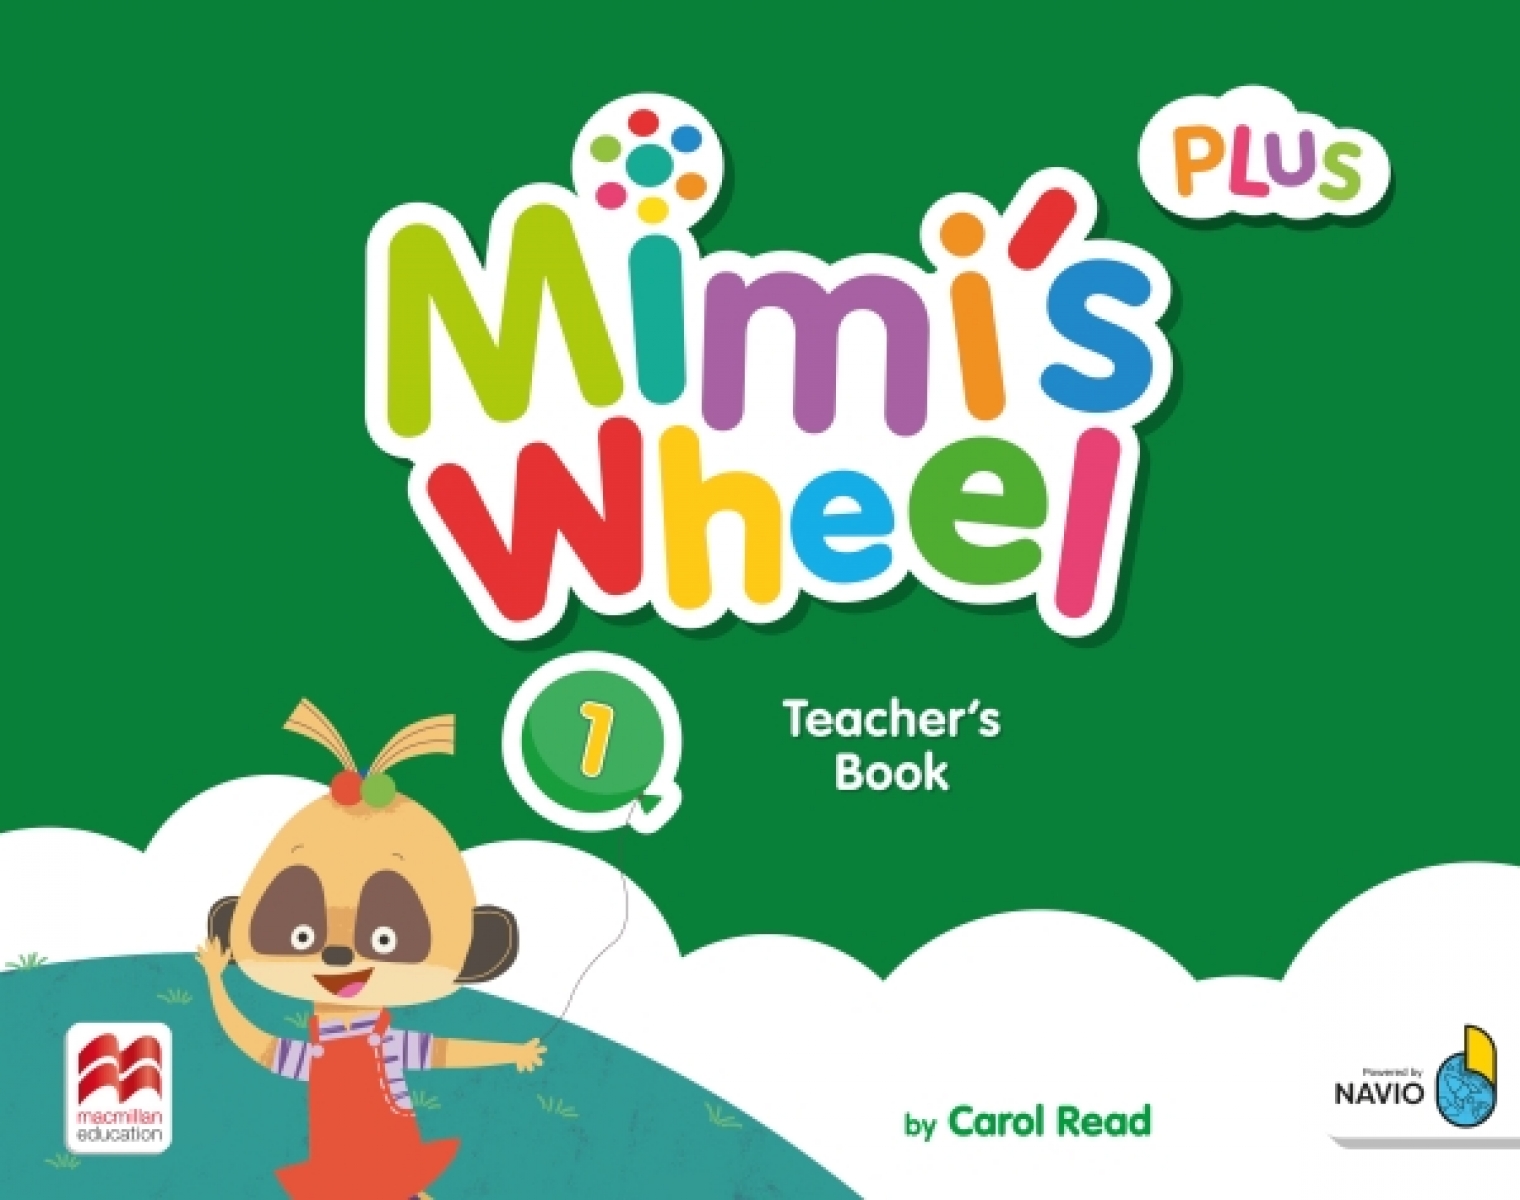 Read, Carol Mimi's Wheel Level 1 Teacher's Book Plus with Navio App 